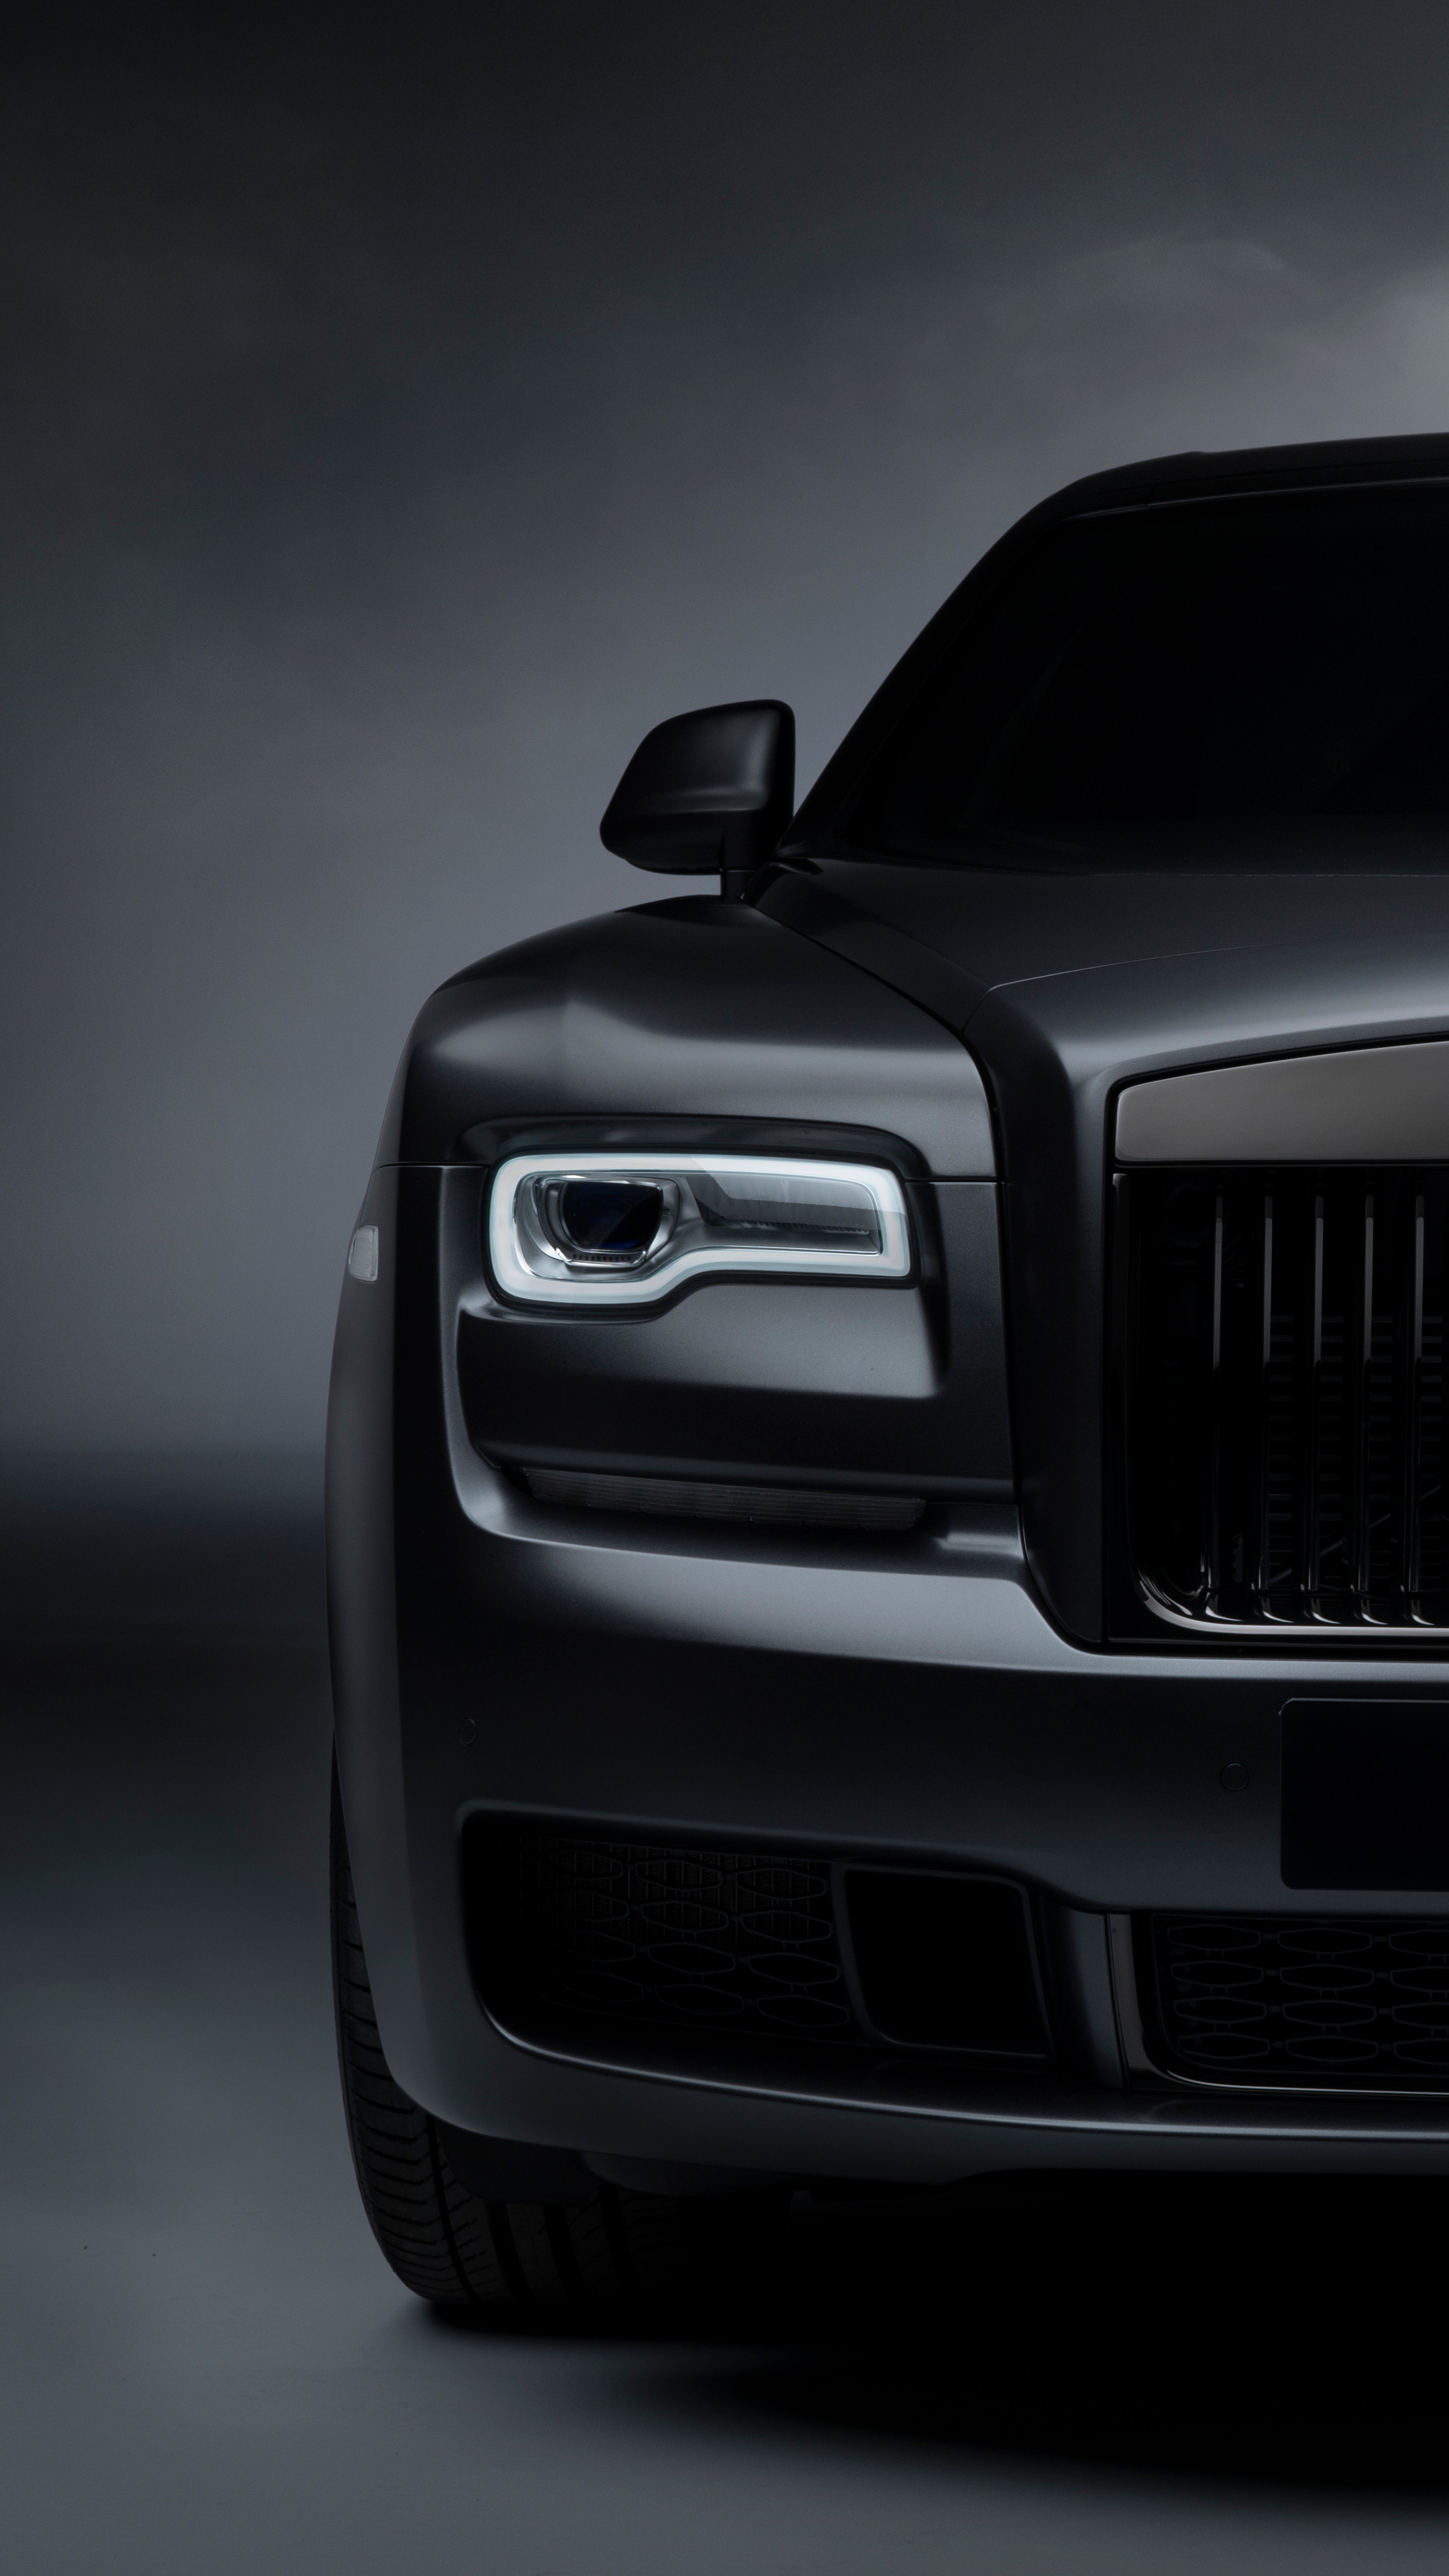 Rolls-Royce Ghost, Stylish black badge, Sony Xperia display, Stunning visuals, 2160x3840 4K Handy